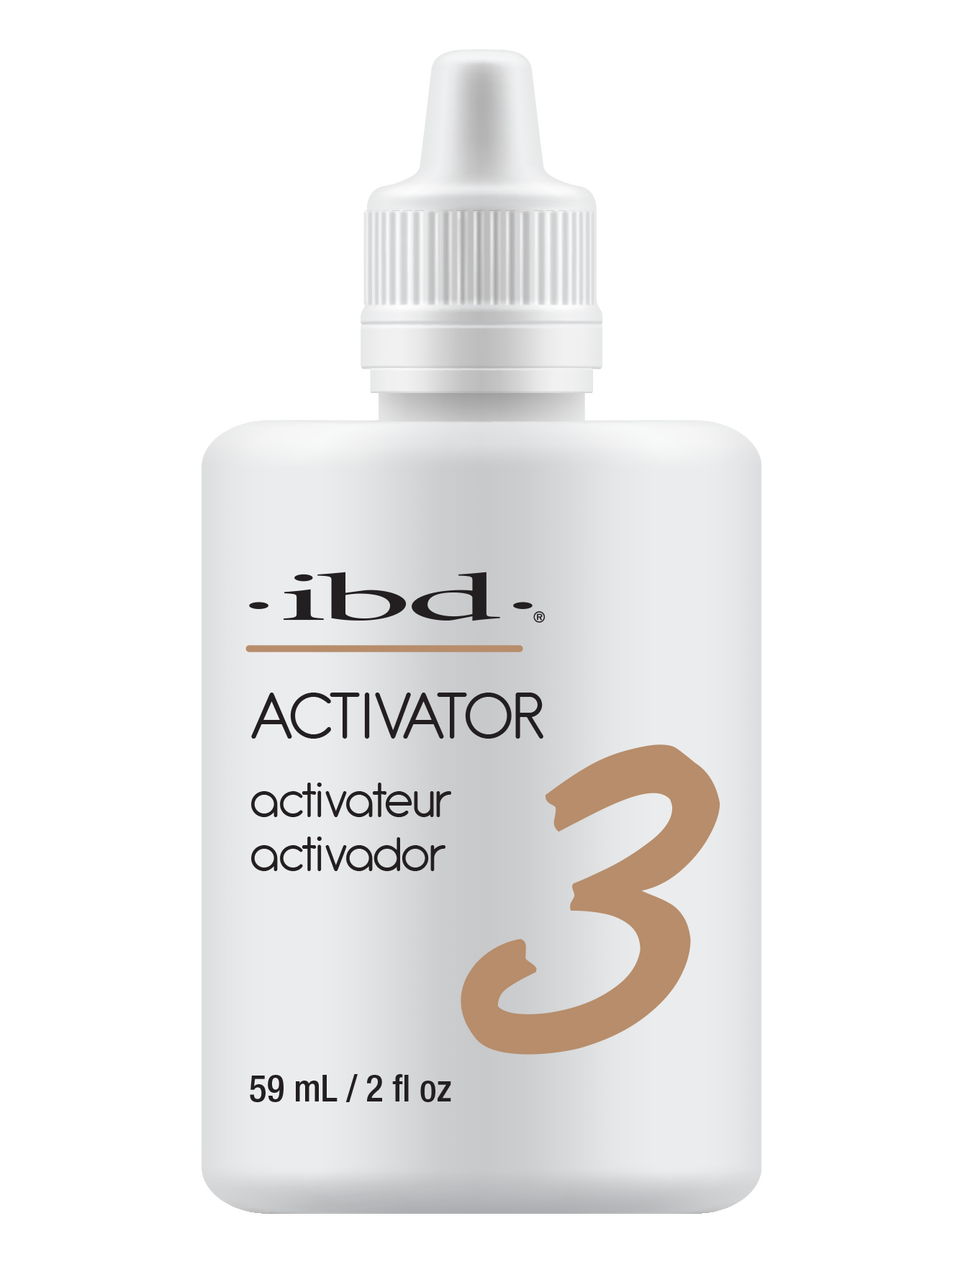 IBD DIP ACTIVATOR REFILL 59ml - Professional Salon Brands